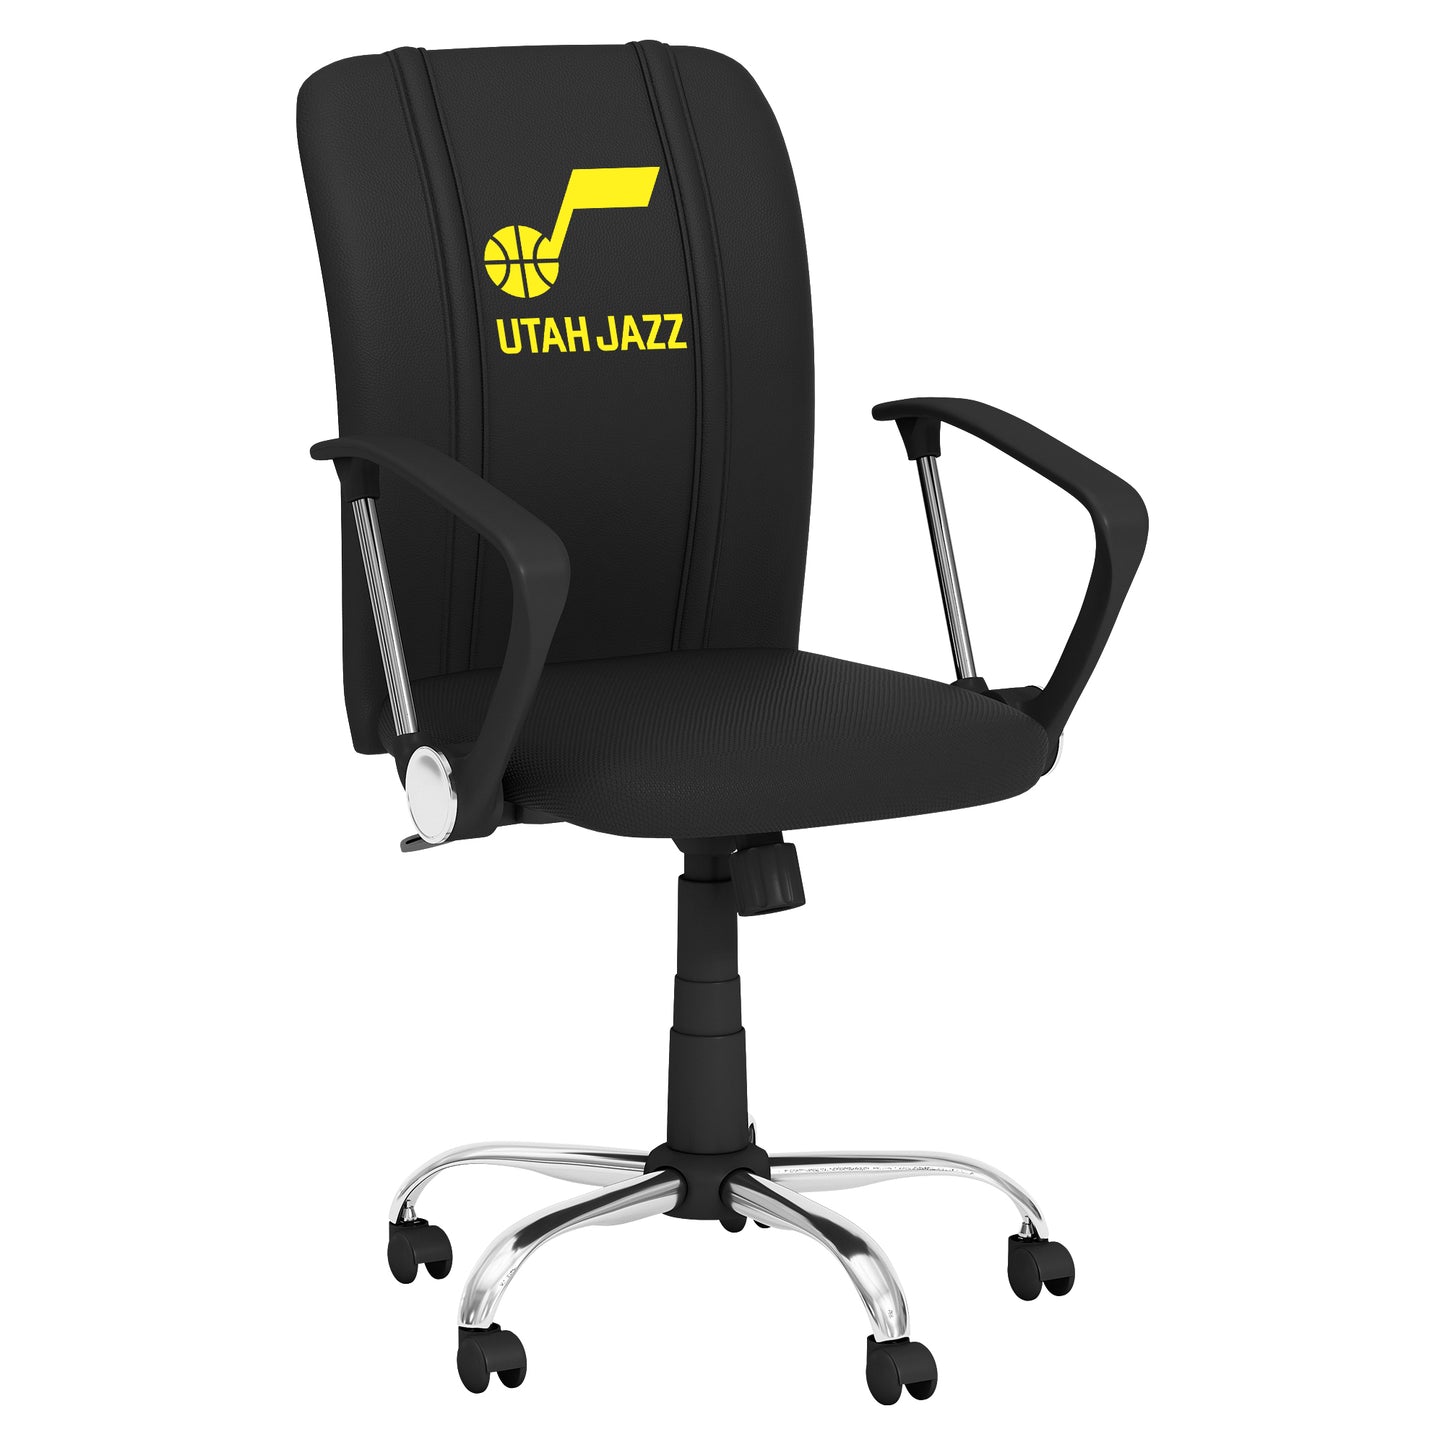 Curve Task Chair with Utah Jazz Global Logo